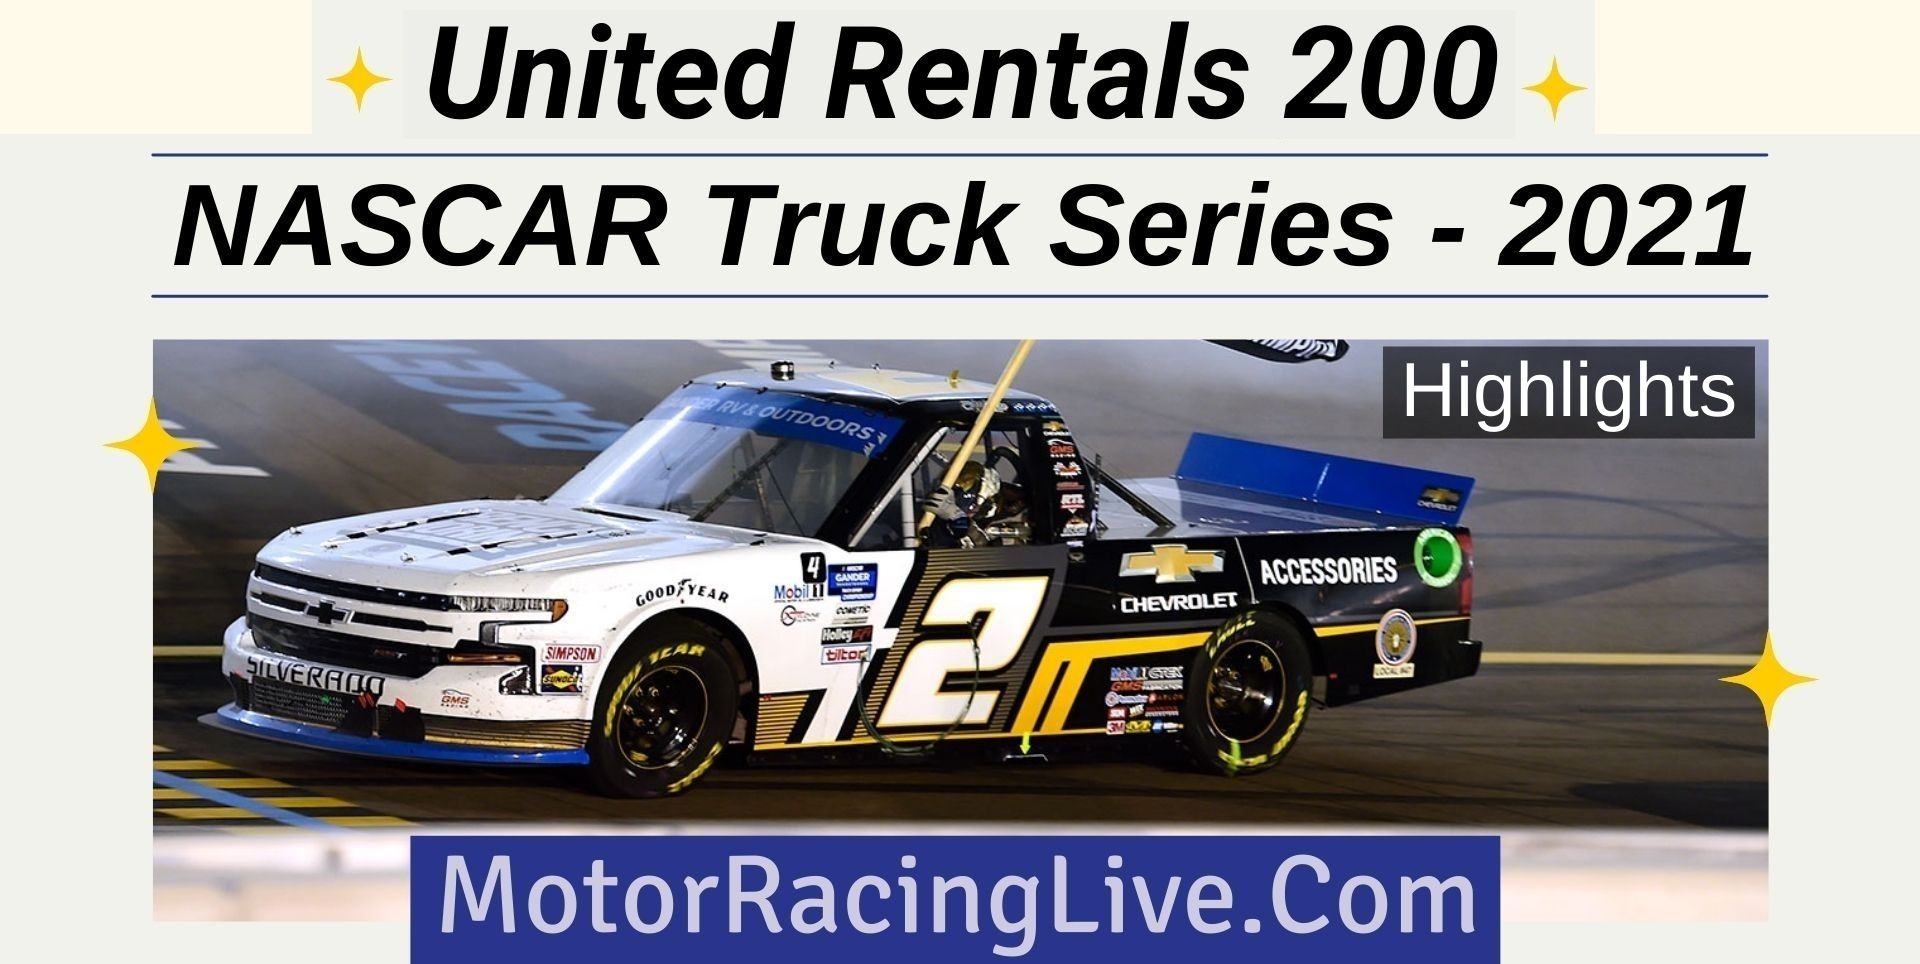 United Rentals 200 Highlights 2021 NASCAR Truck Series